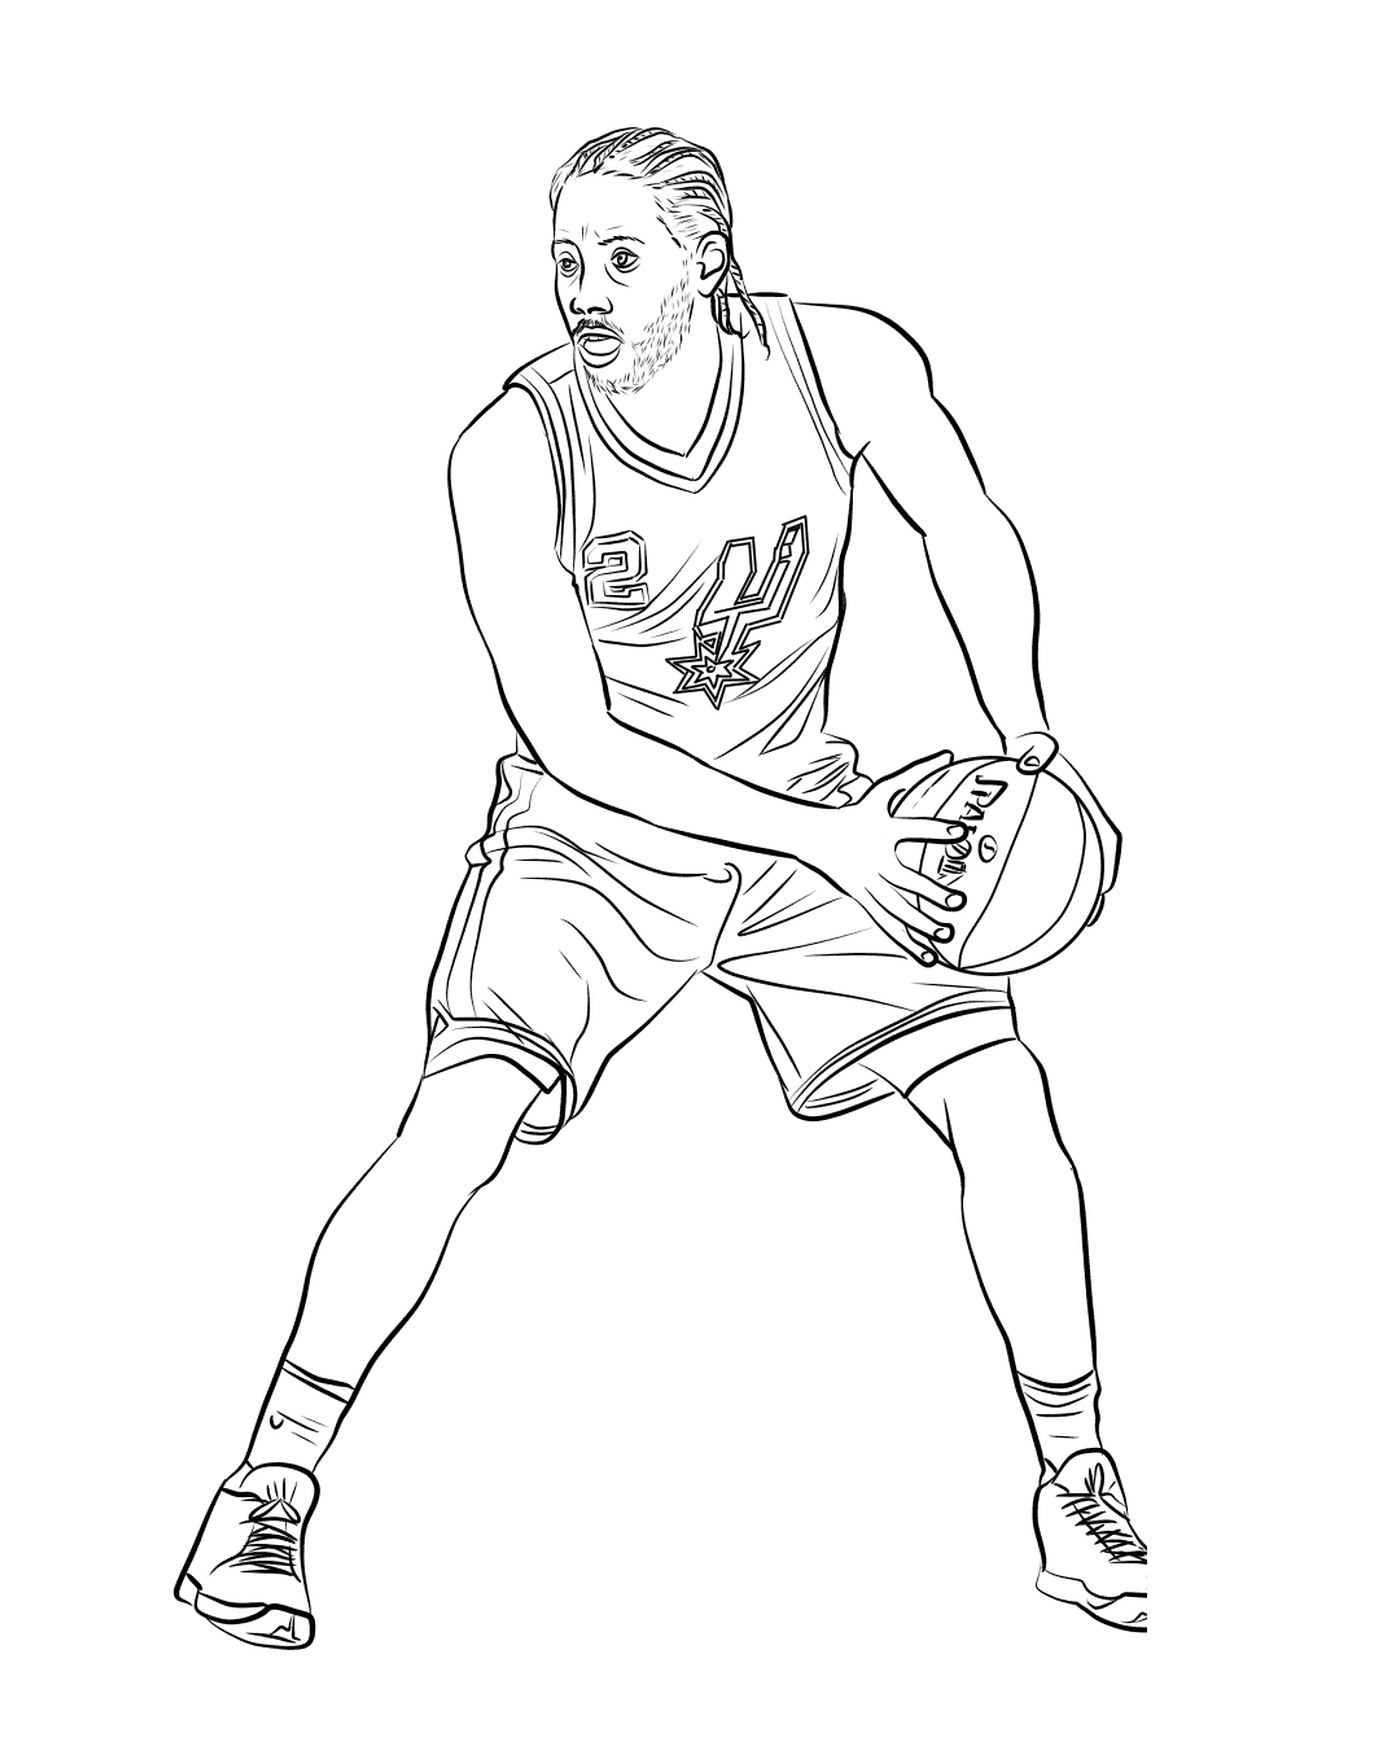  Kawhi Leonard,篮球运动员 